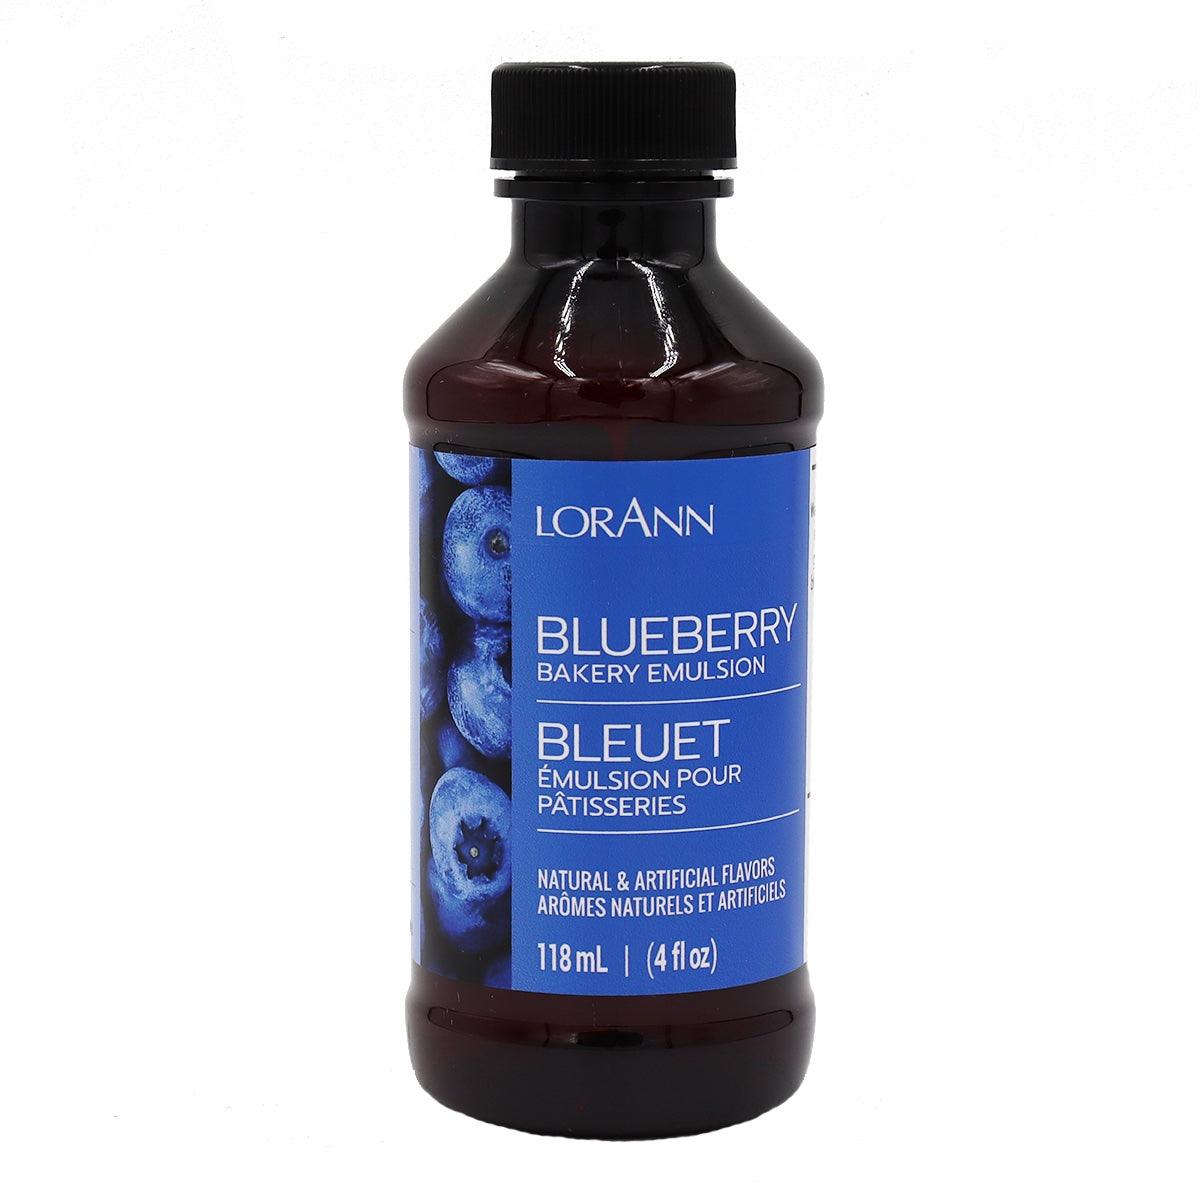 Blueberry Emulsion 4 fl oz (118ml) - ViaCheff.com